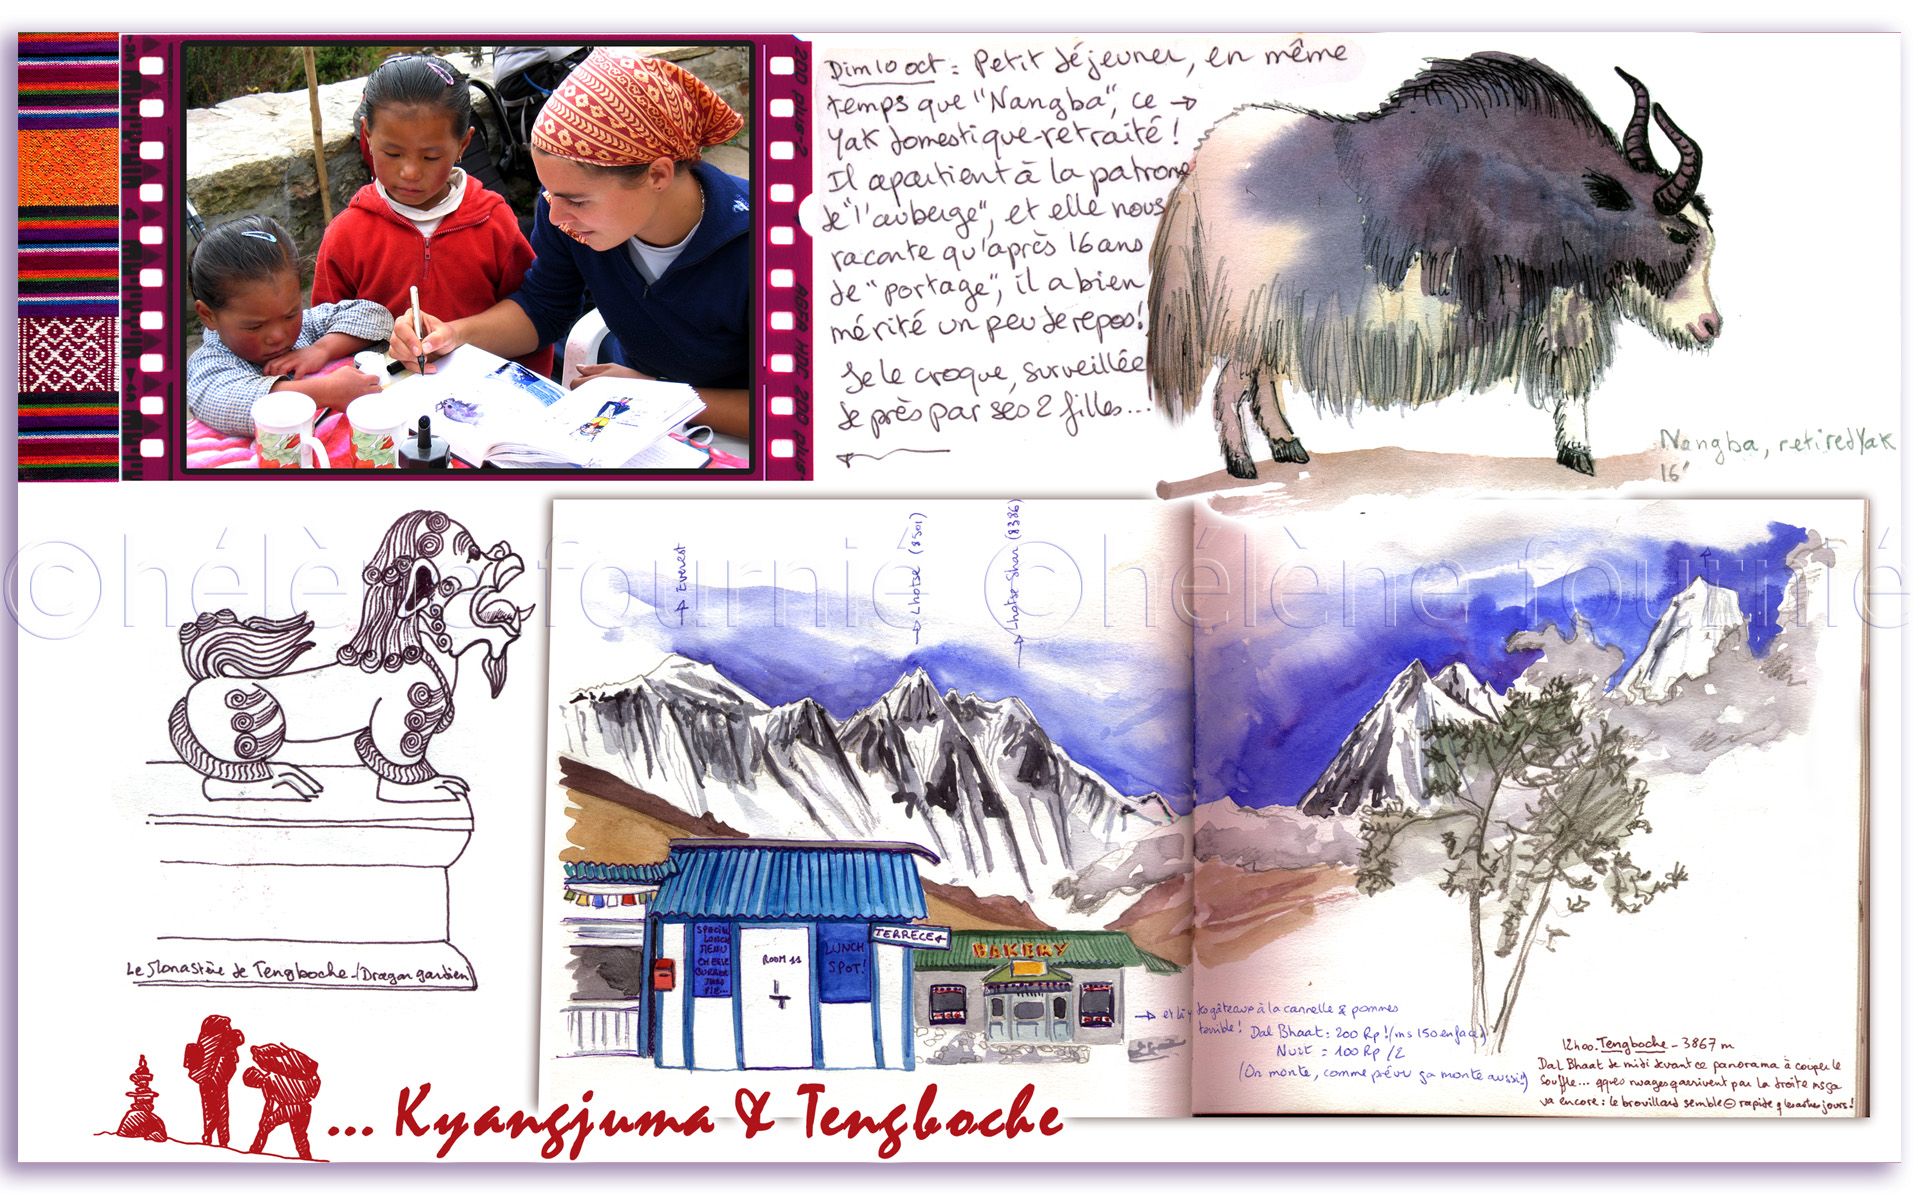 Travel diary in Nepal...